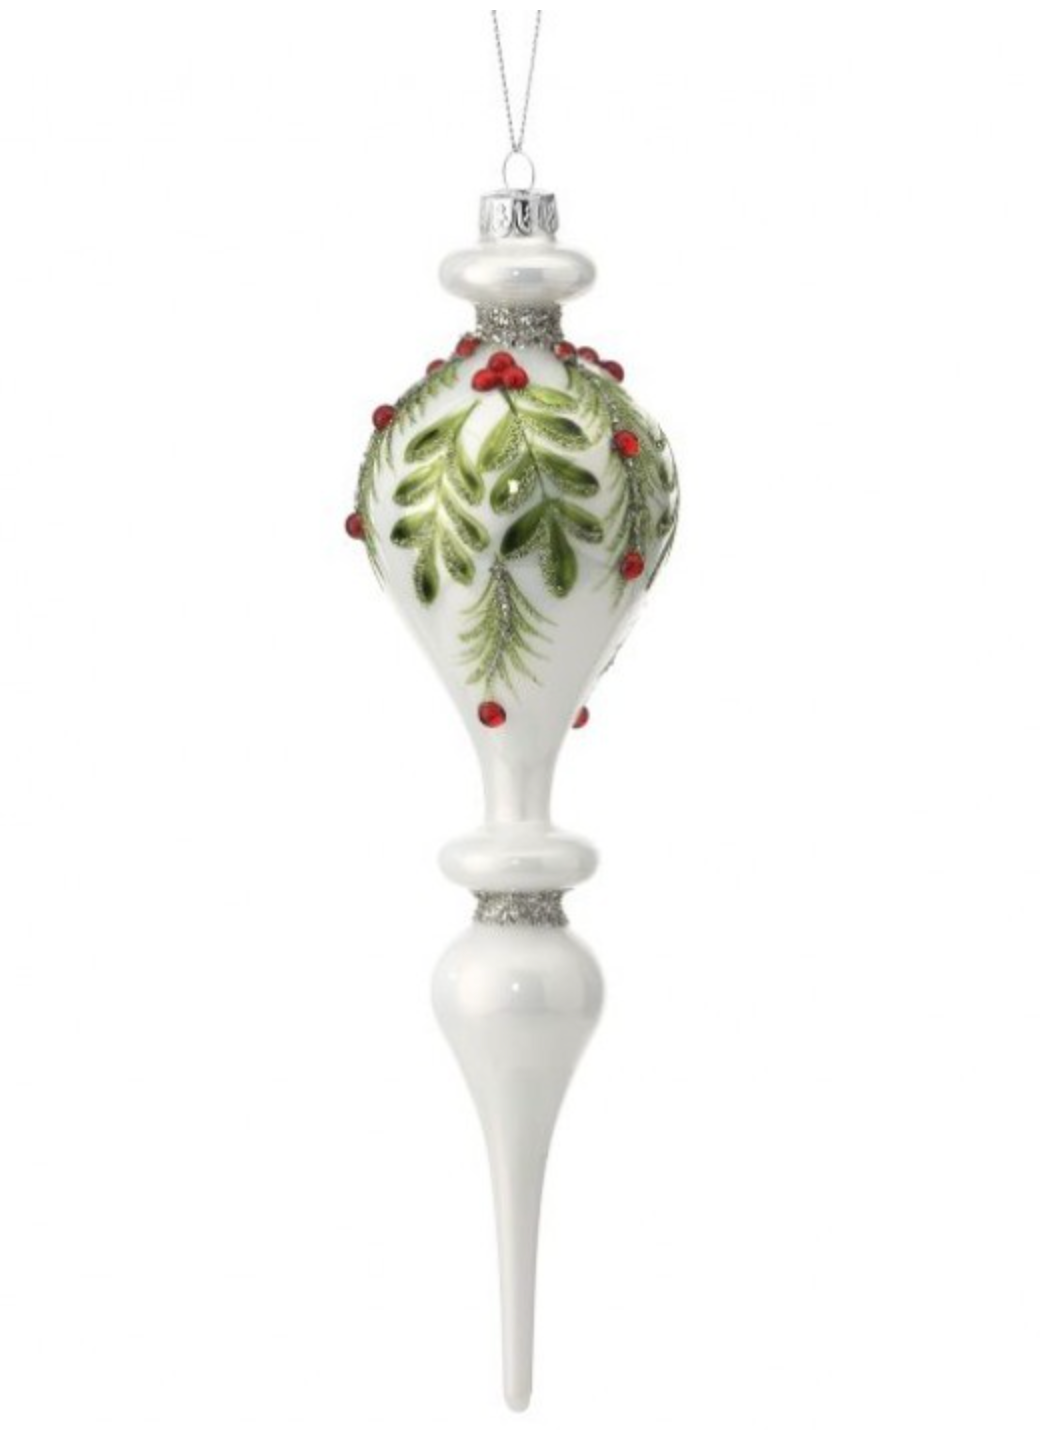 10" Glass Berry/Leaf/Pine Finial Ornament